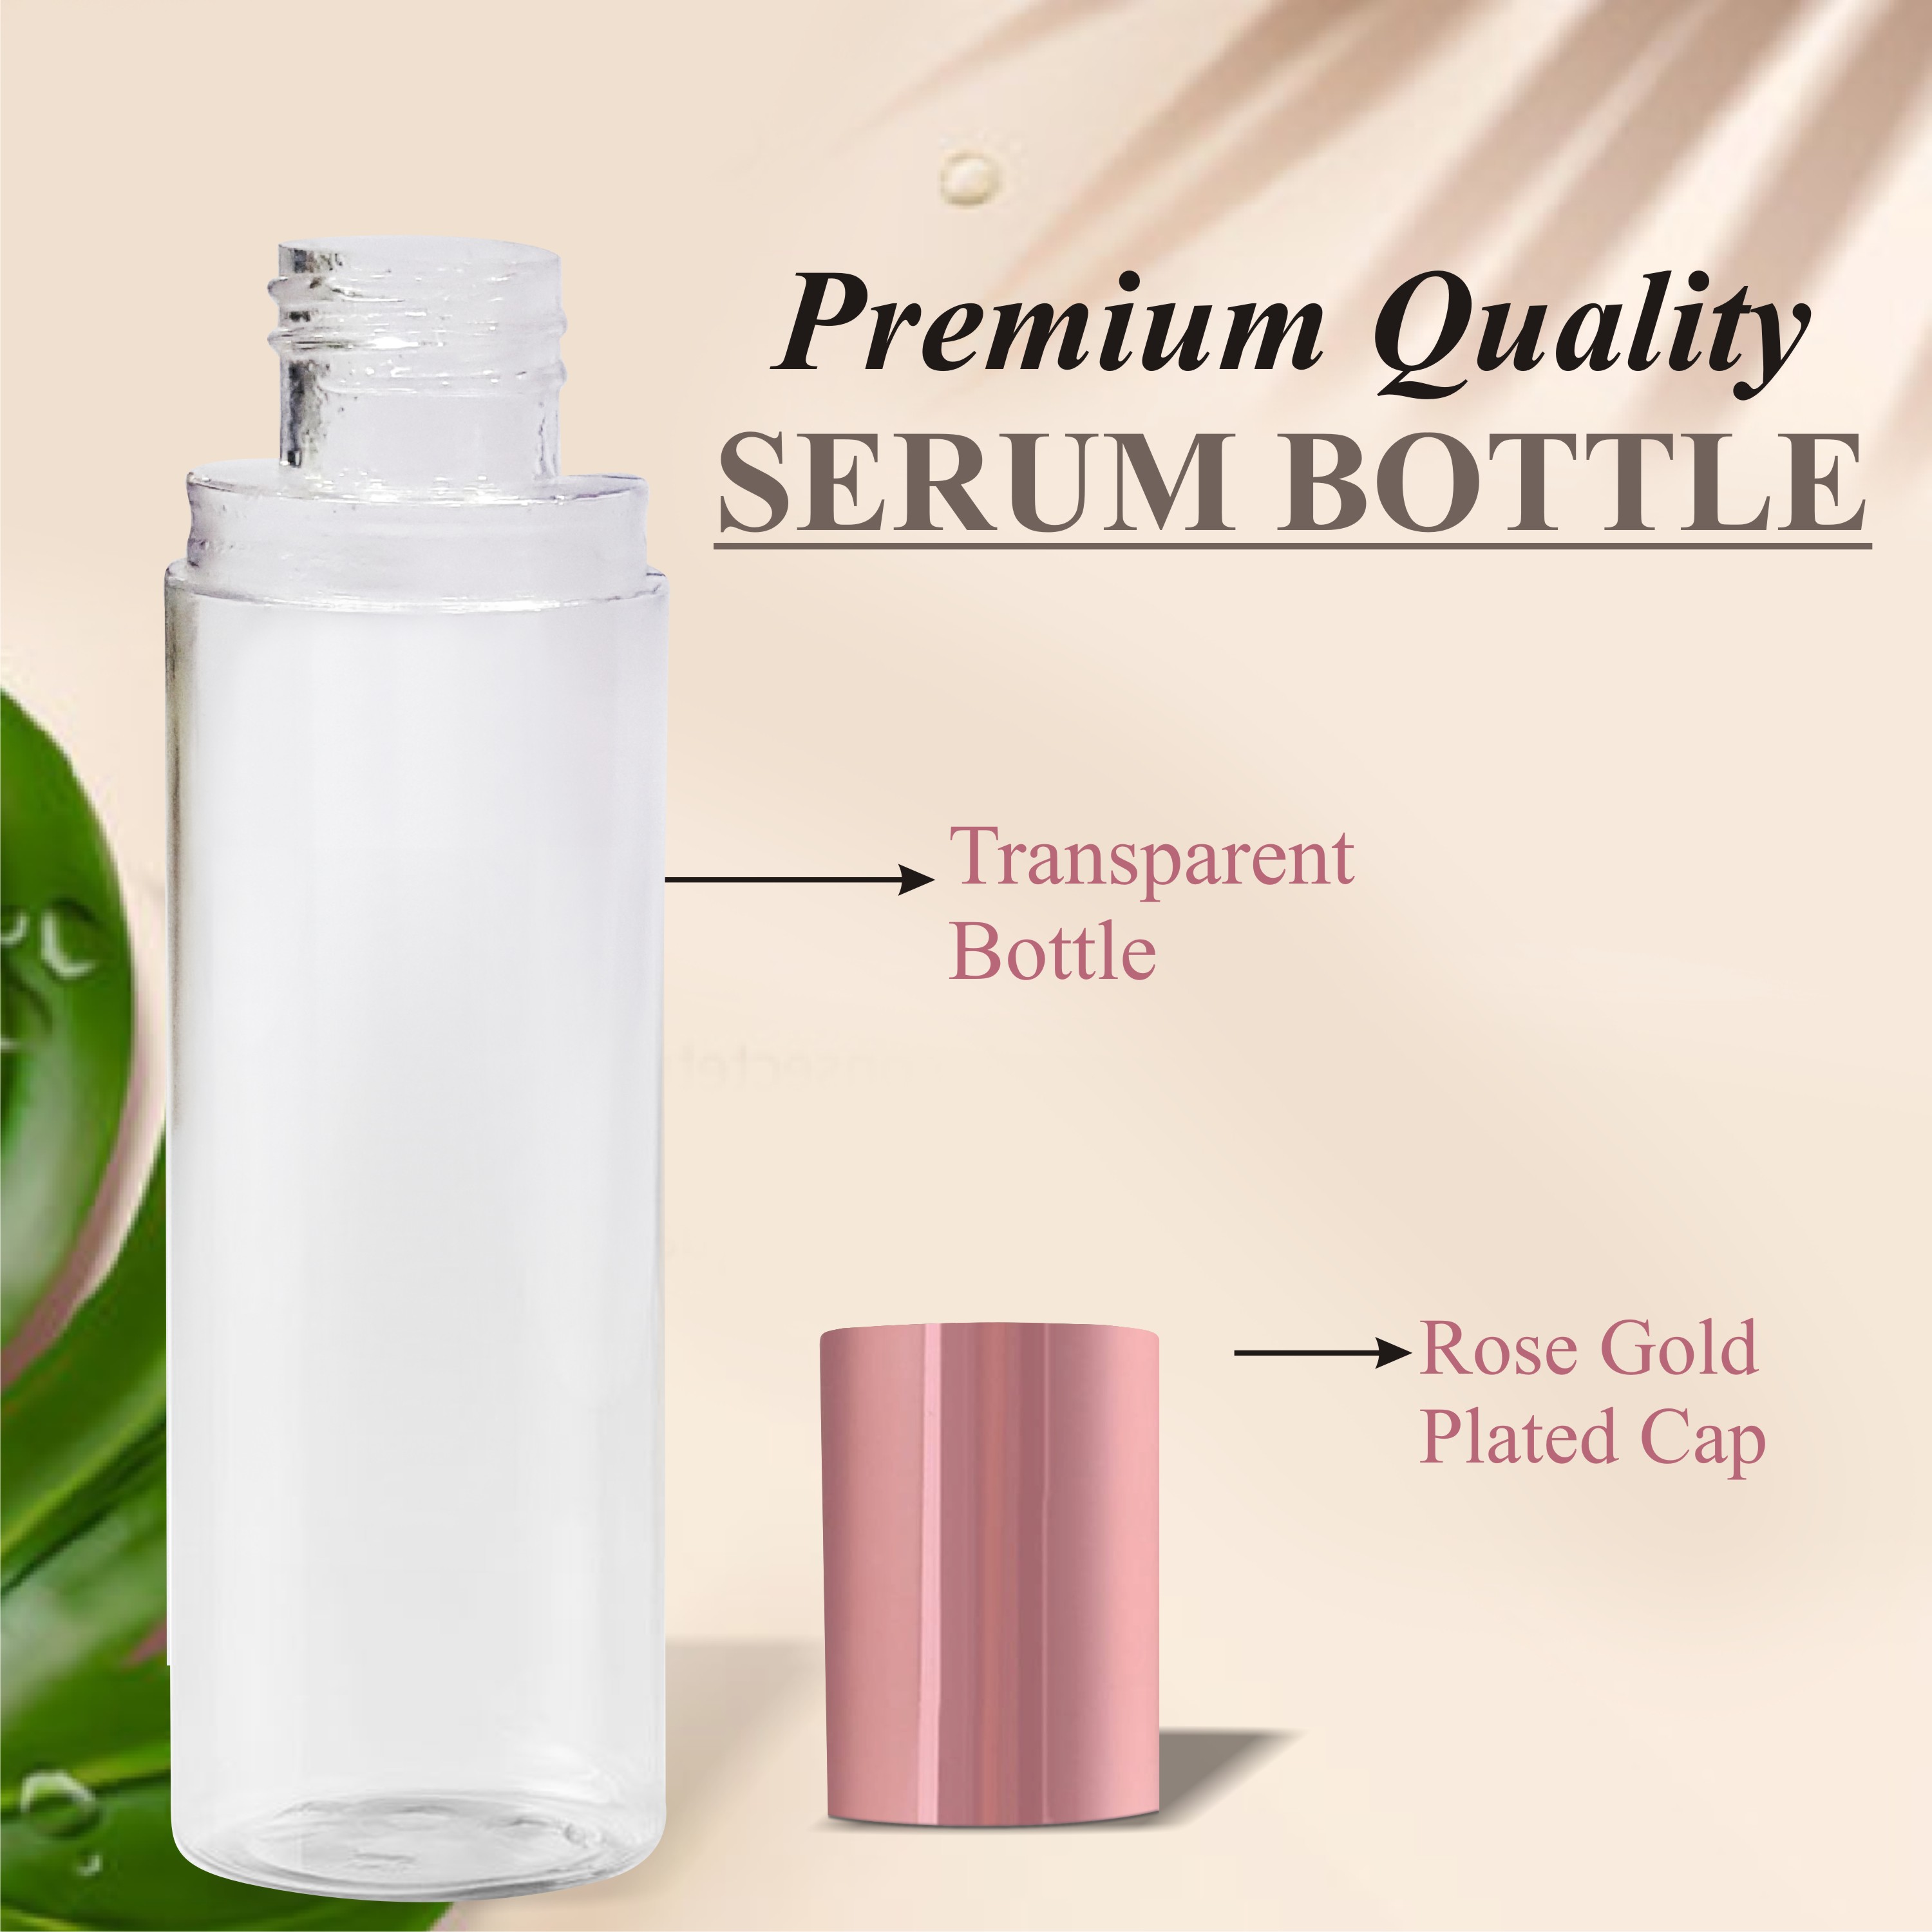 Premium Quality Serum Bottle from Zenvista Meditech Pvt. Ltd.